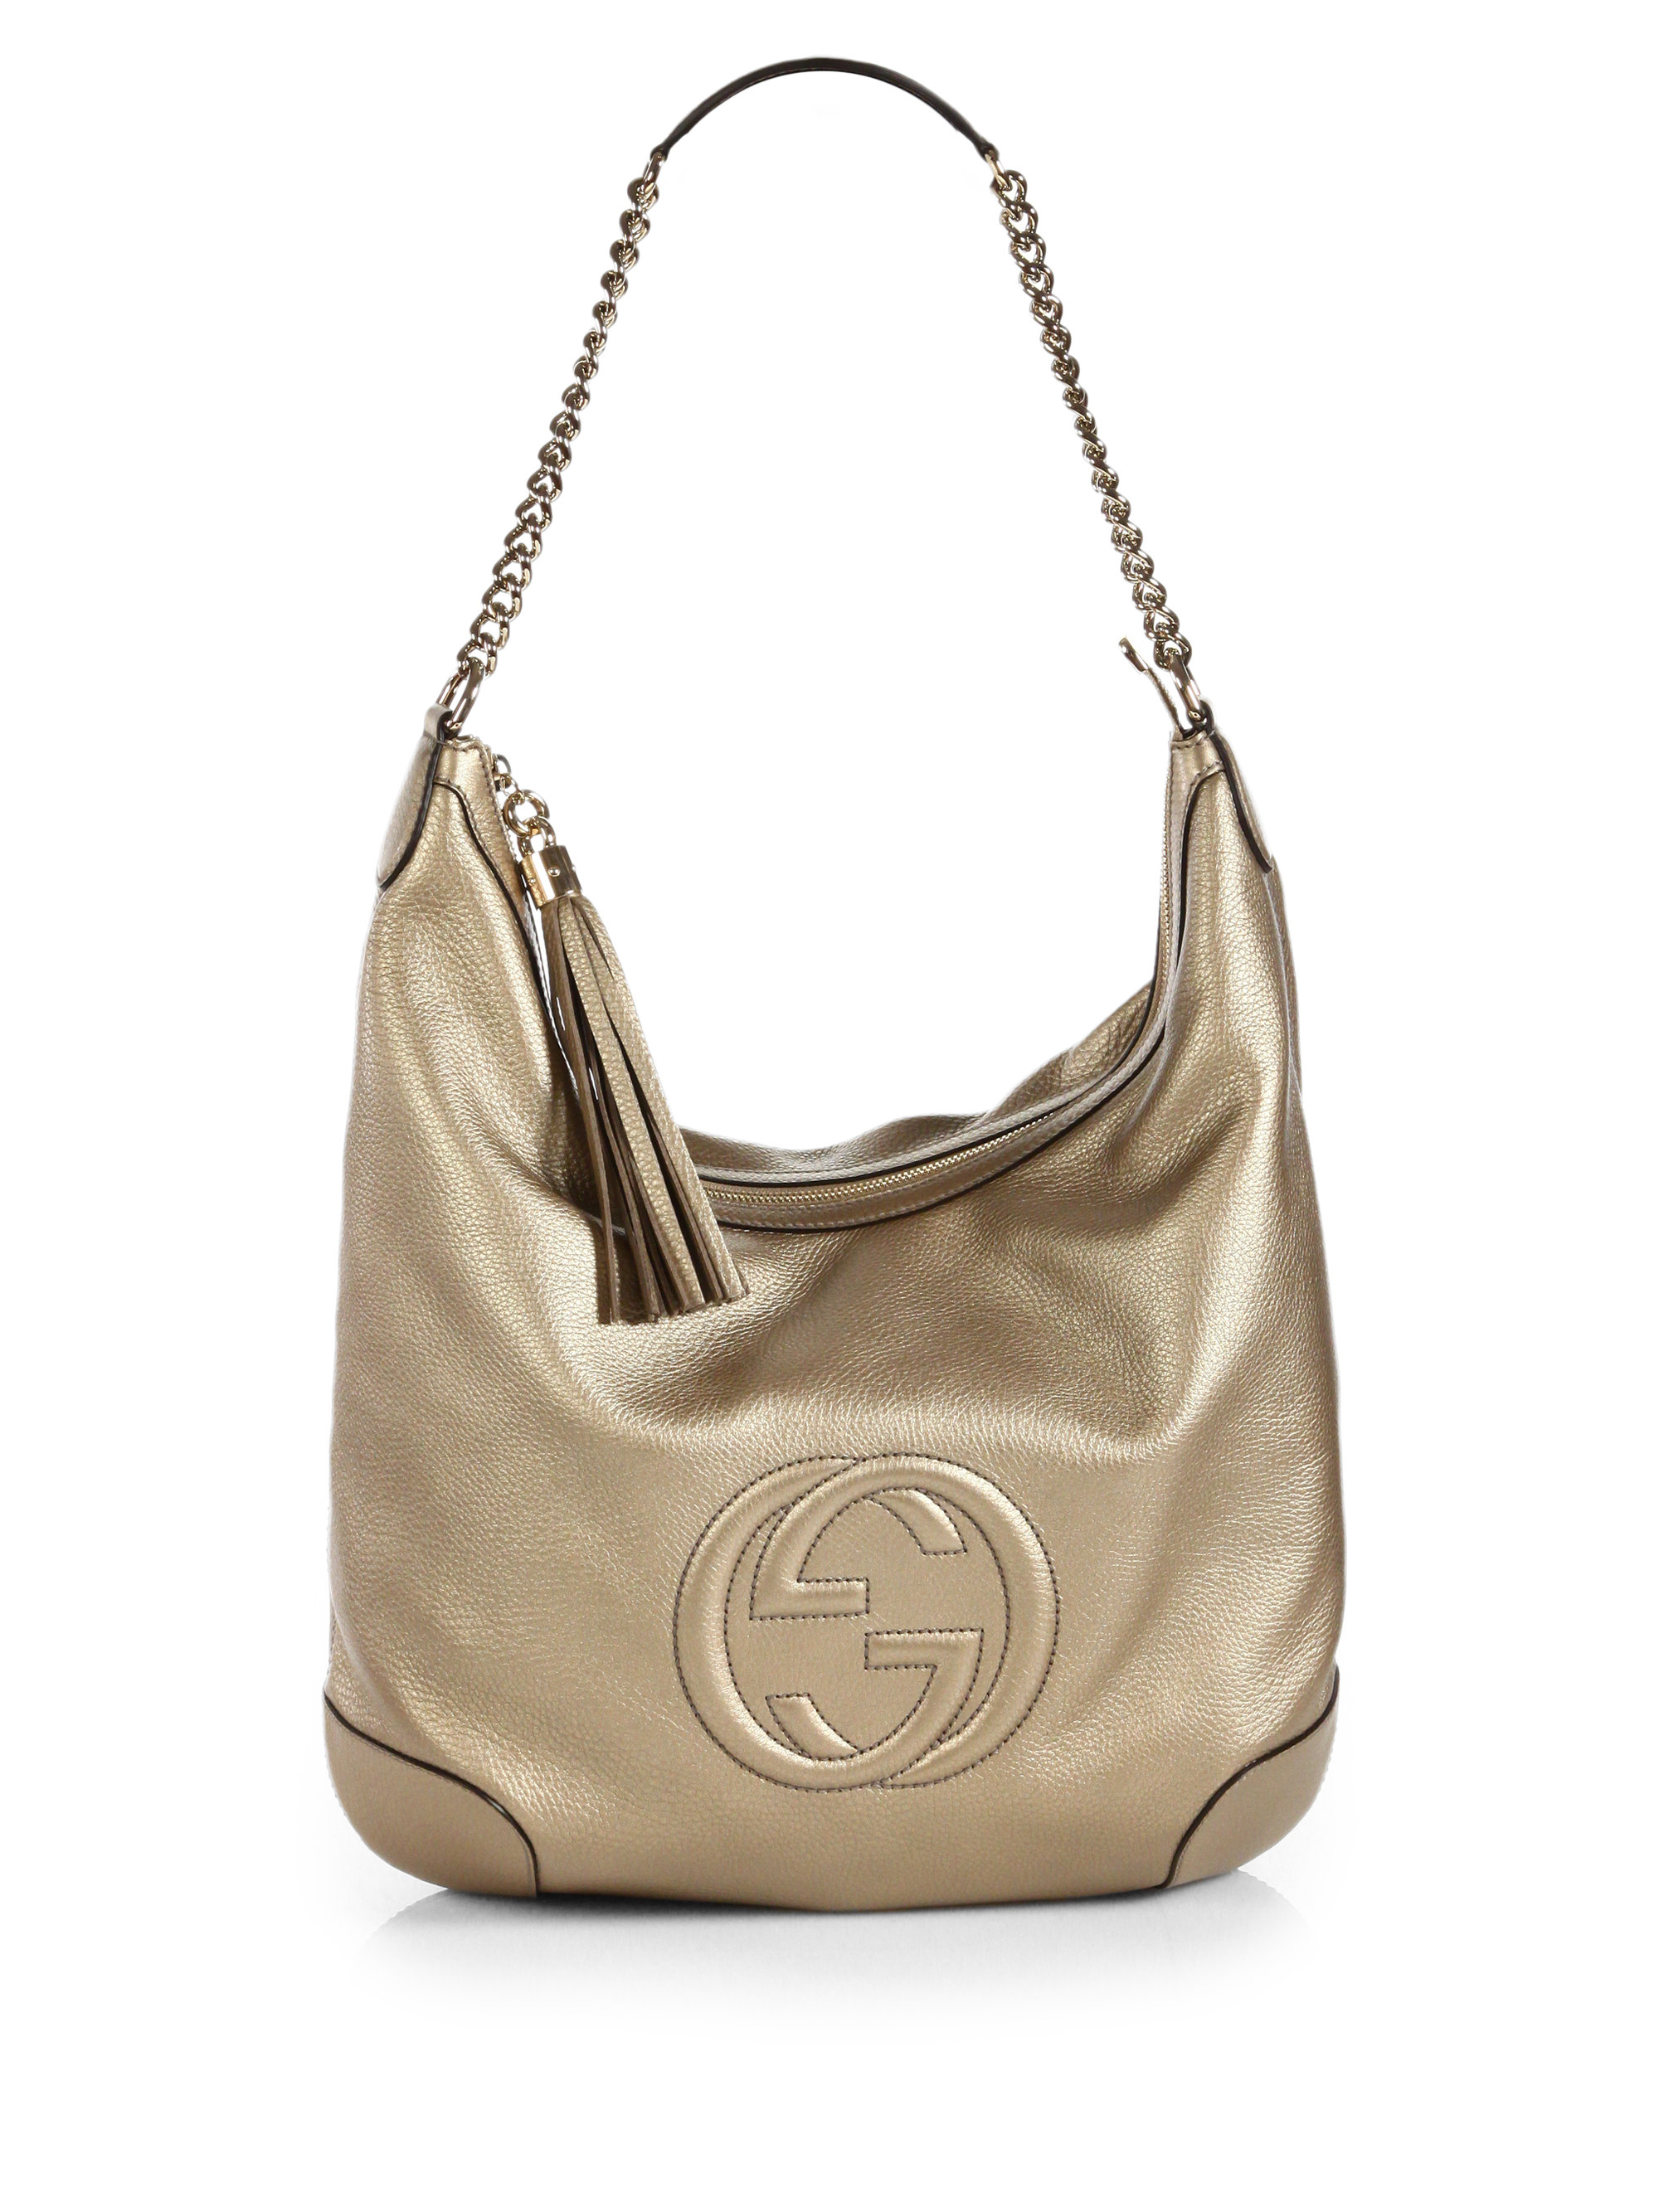 Gucci Soho Metallic Leather Chain Shoulder Bag in Gold (SUGAR) | Lyst